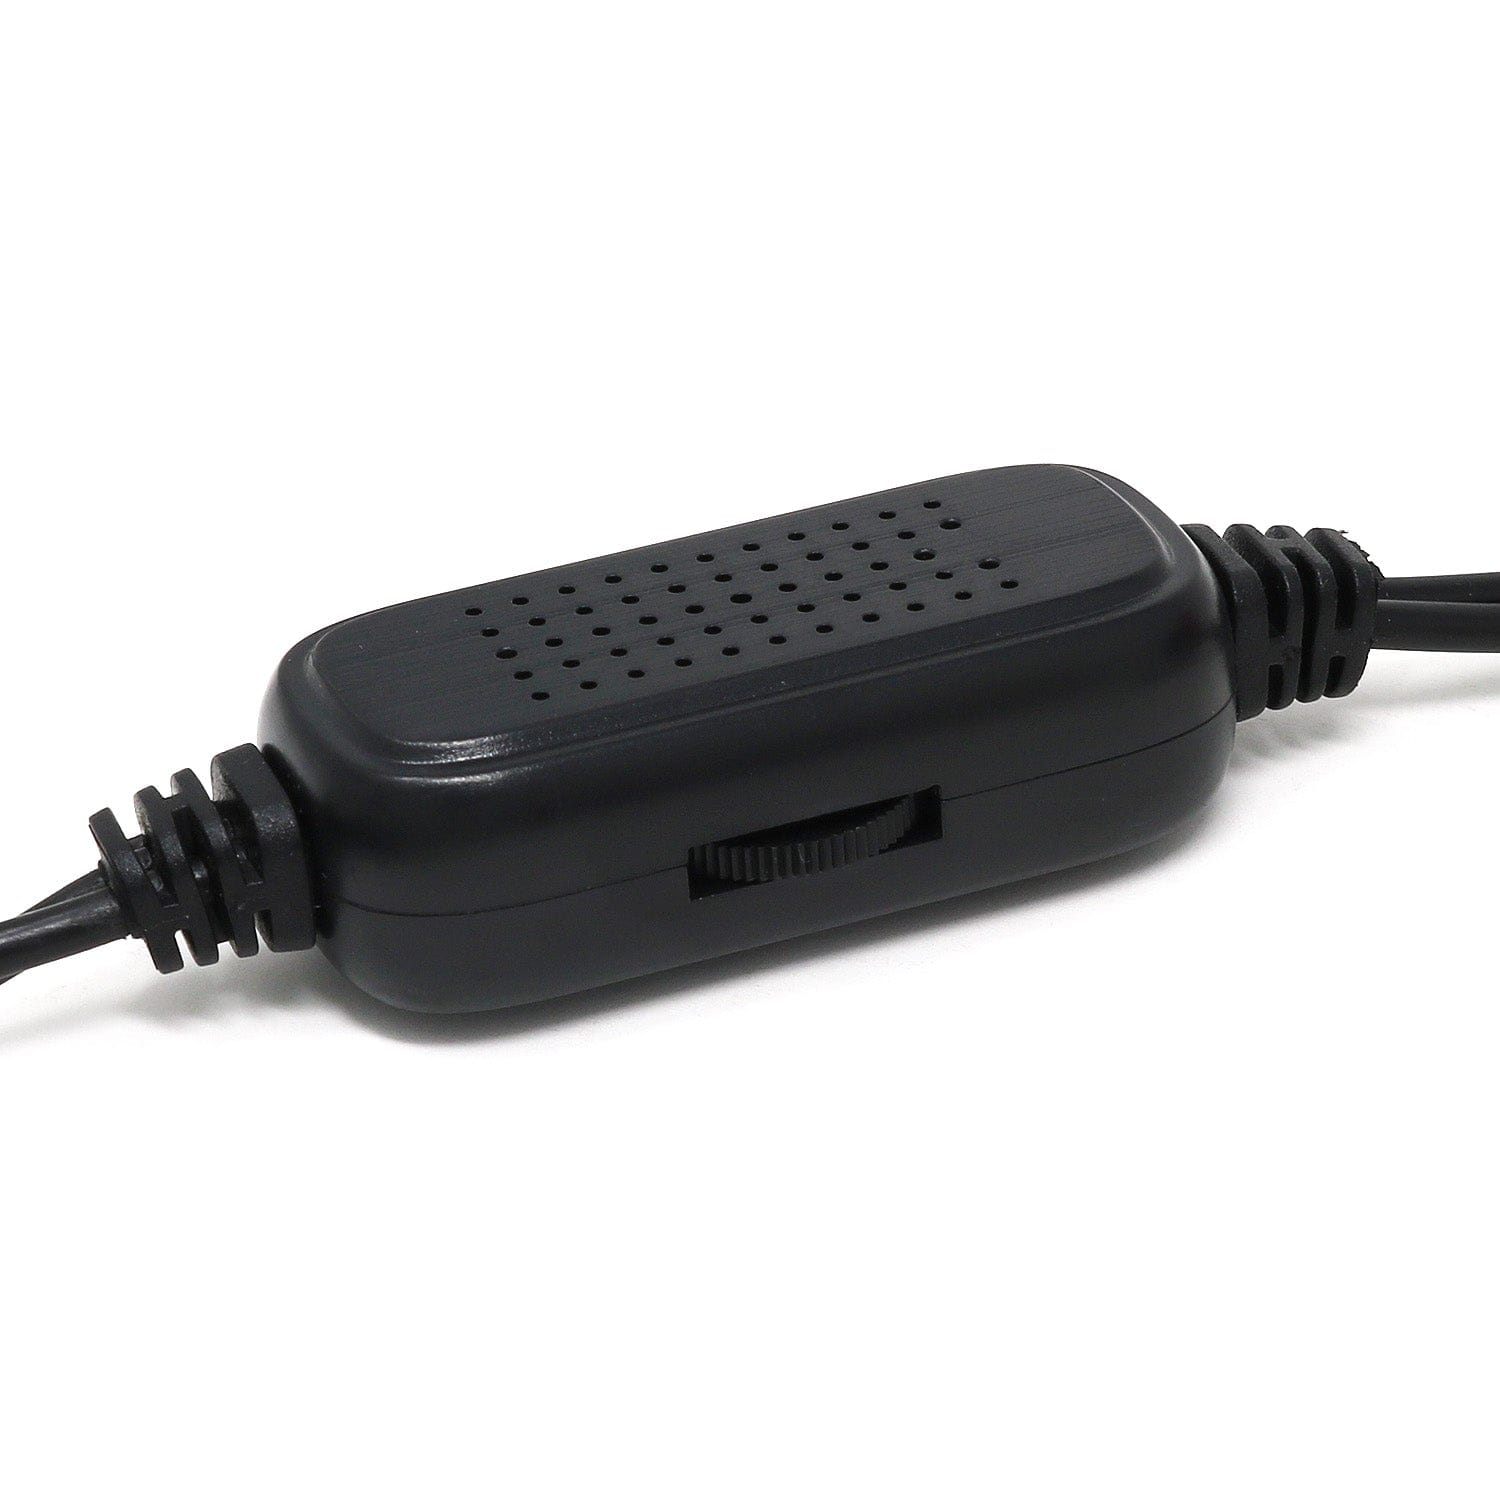 USB Powered Speakers - The Pi Hut